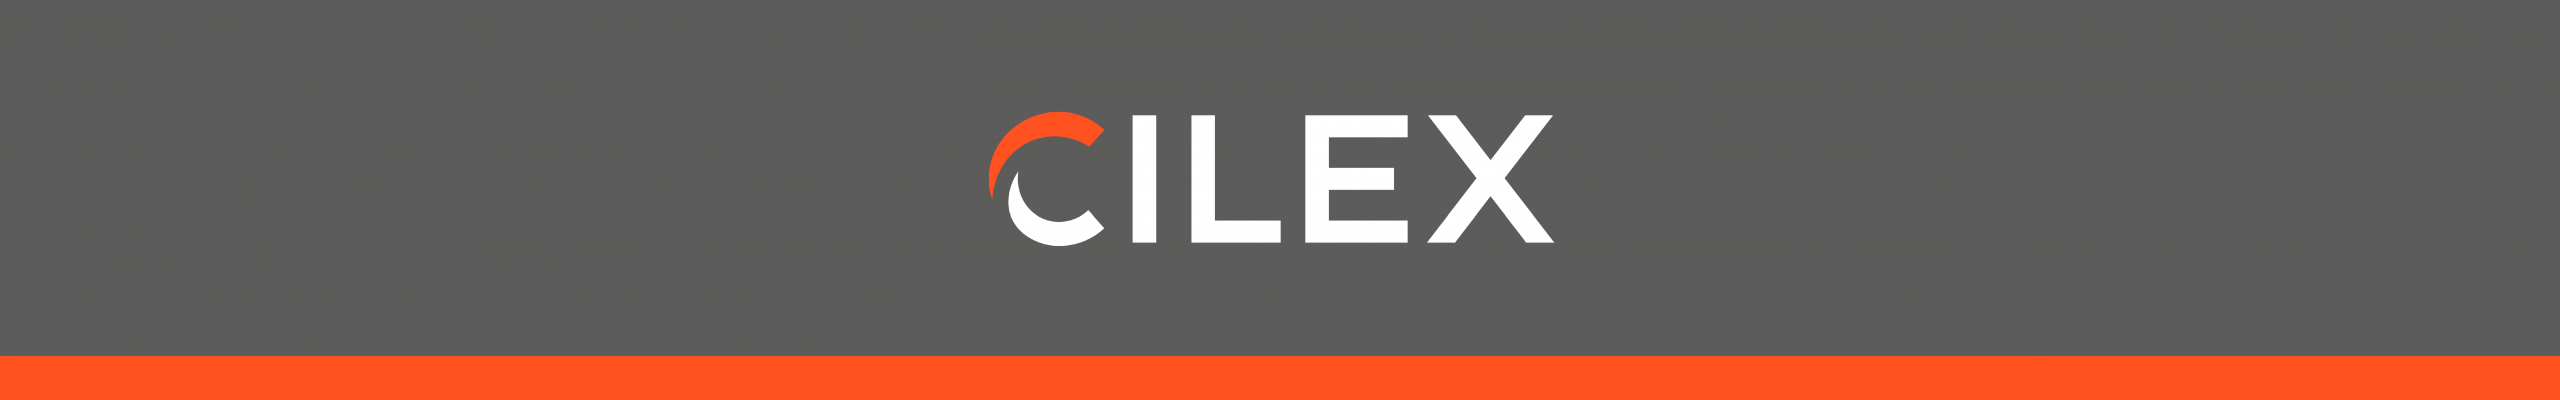 CILEX logo